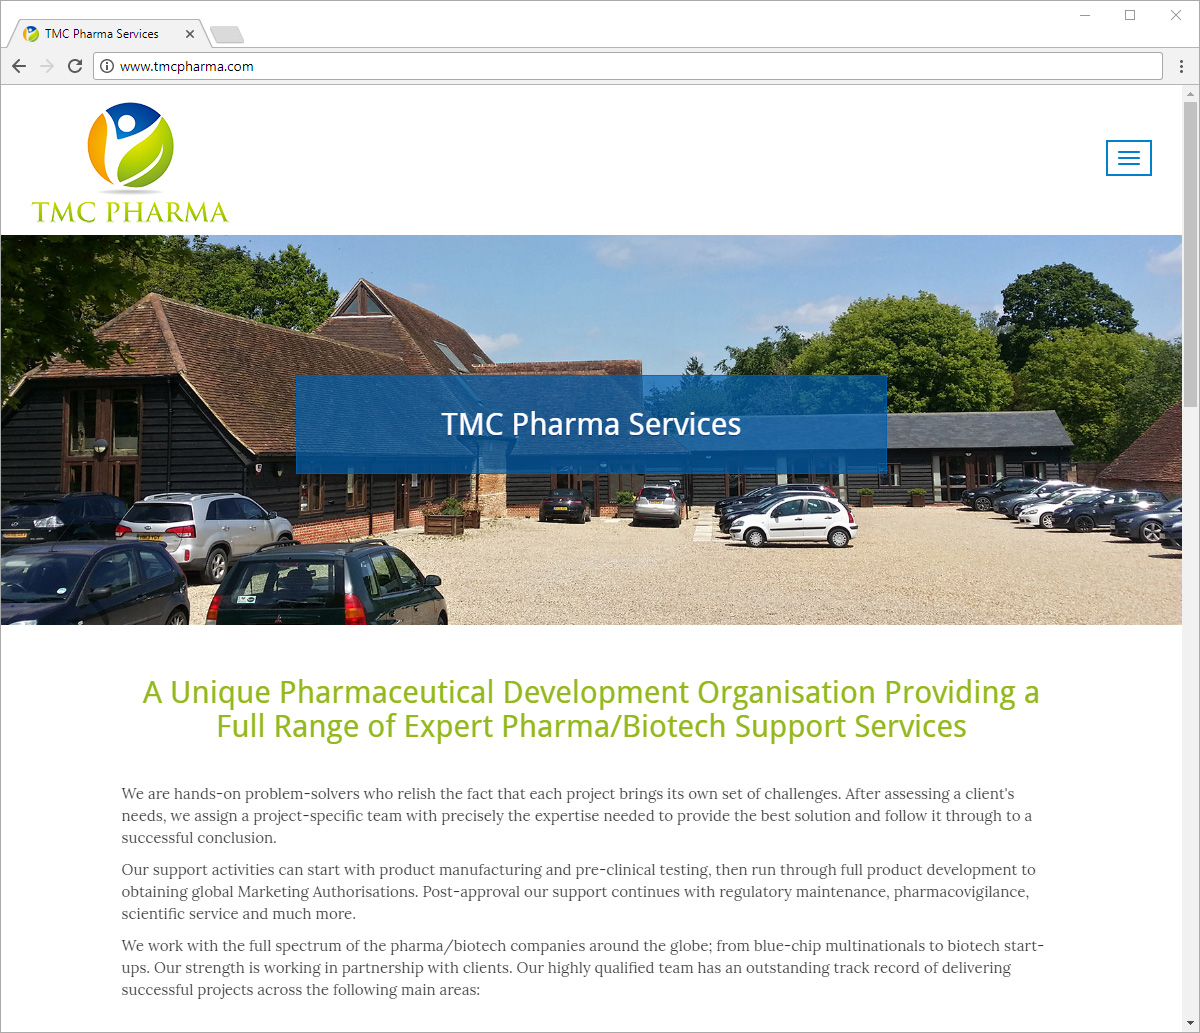 Computer screen preview of TMC Pharma website